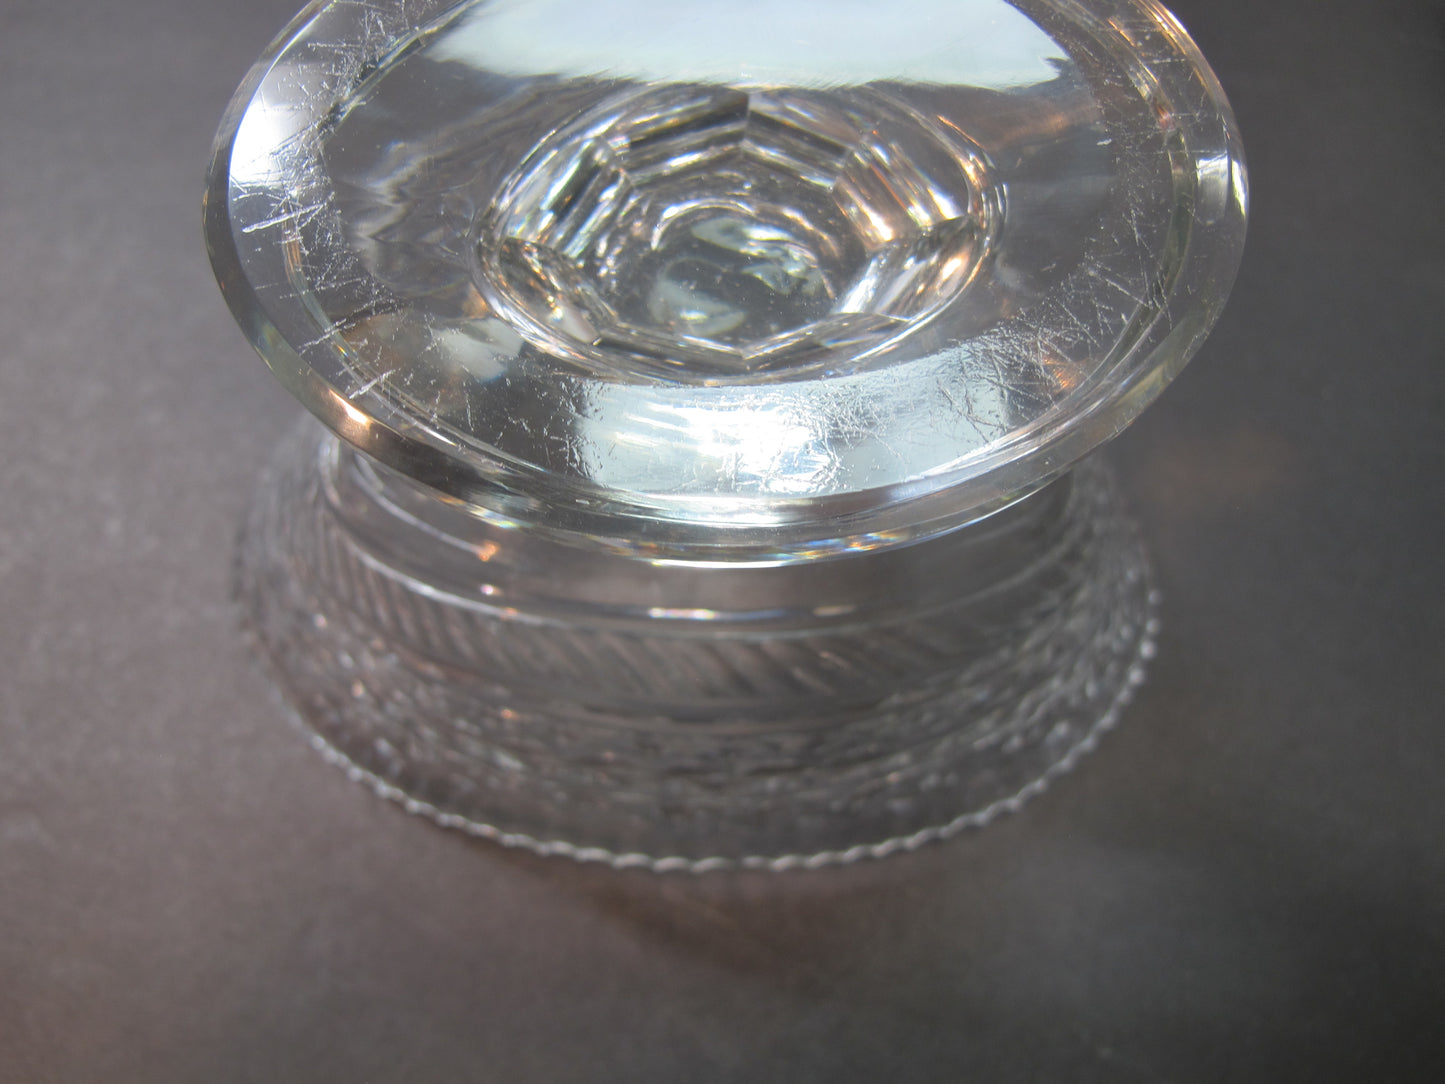 Hand Cut Glass pedestal oval dish Antique